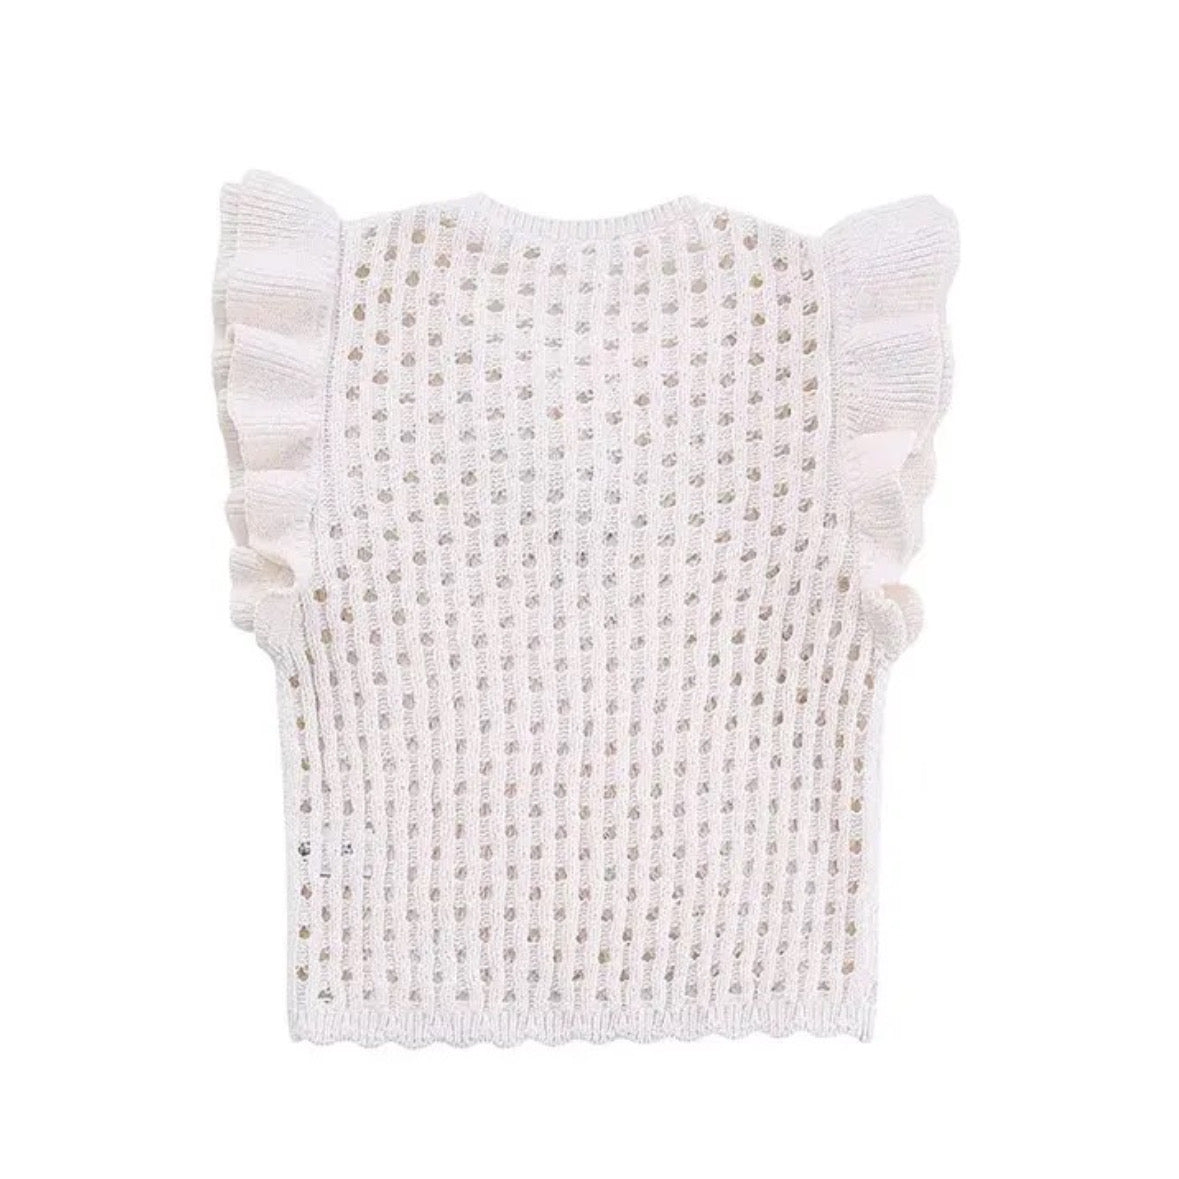 Ivory White Knit Crochet Ruffle Sleeve Blouse Top